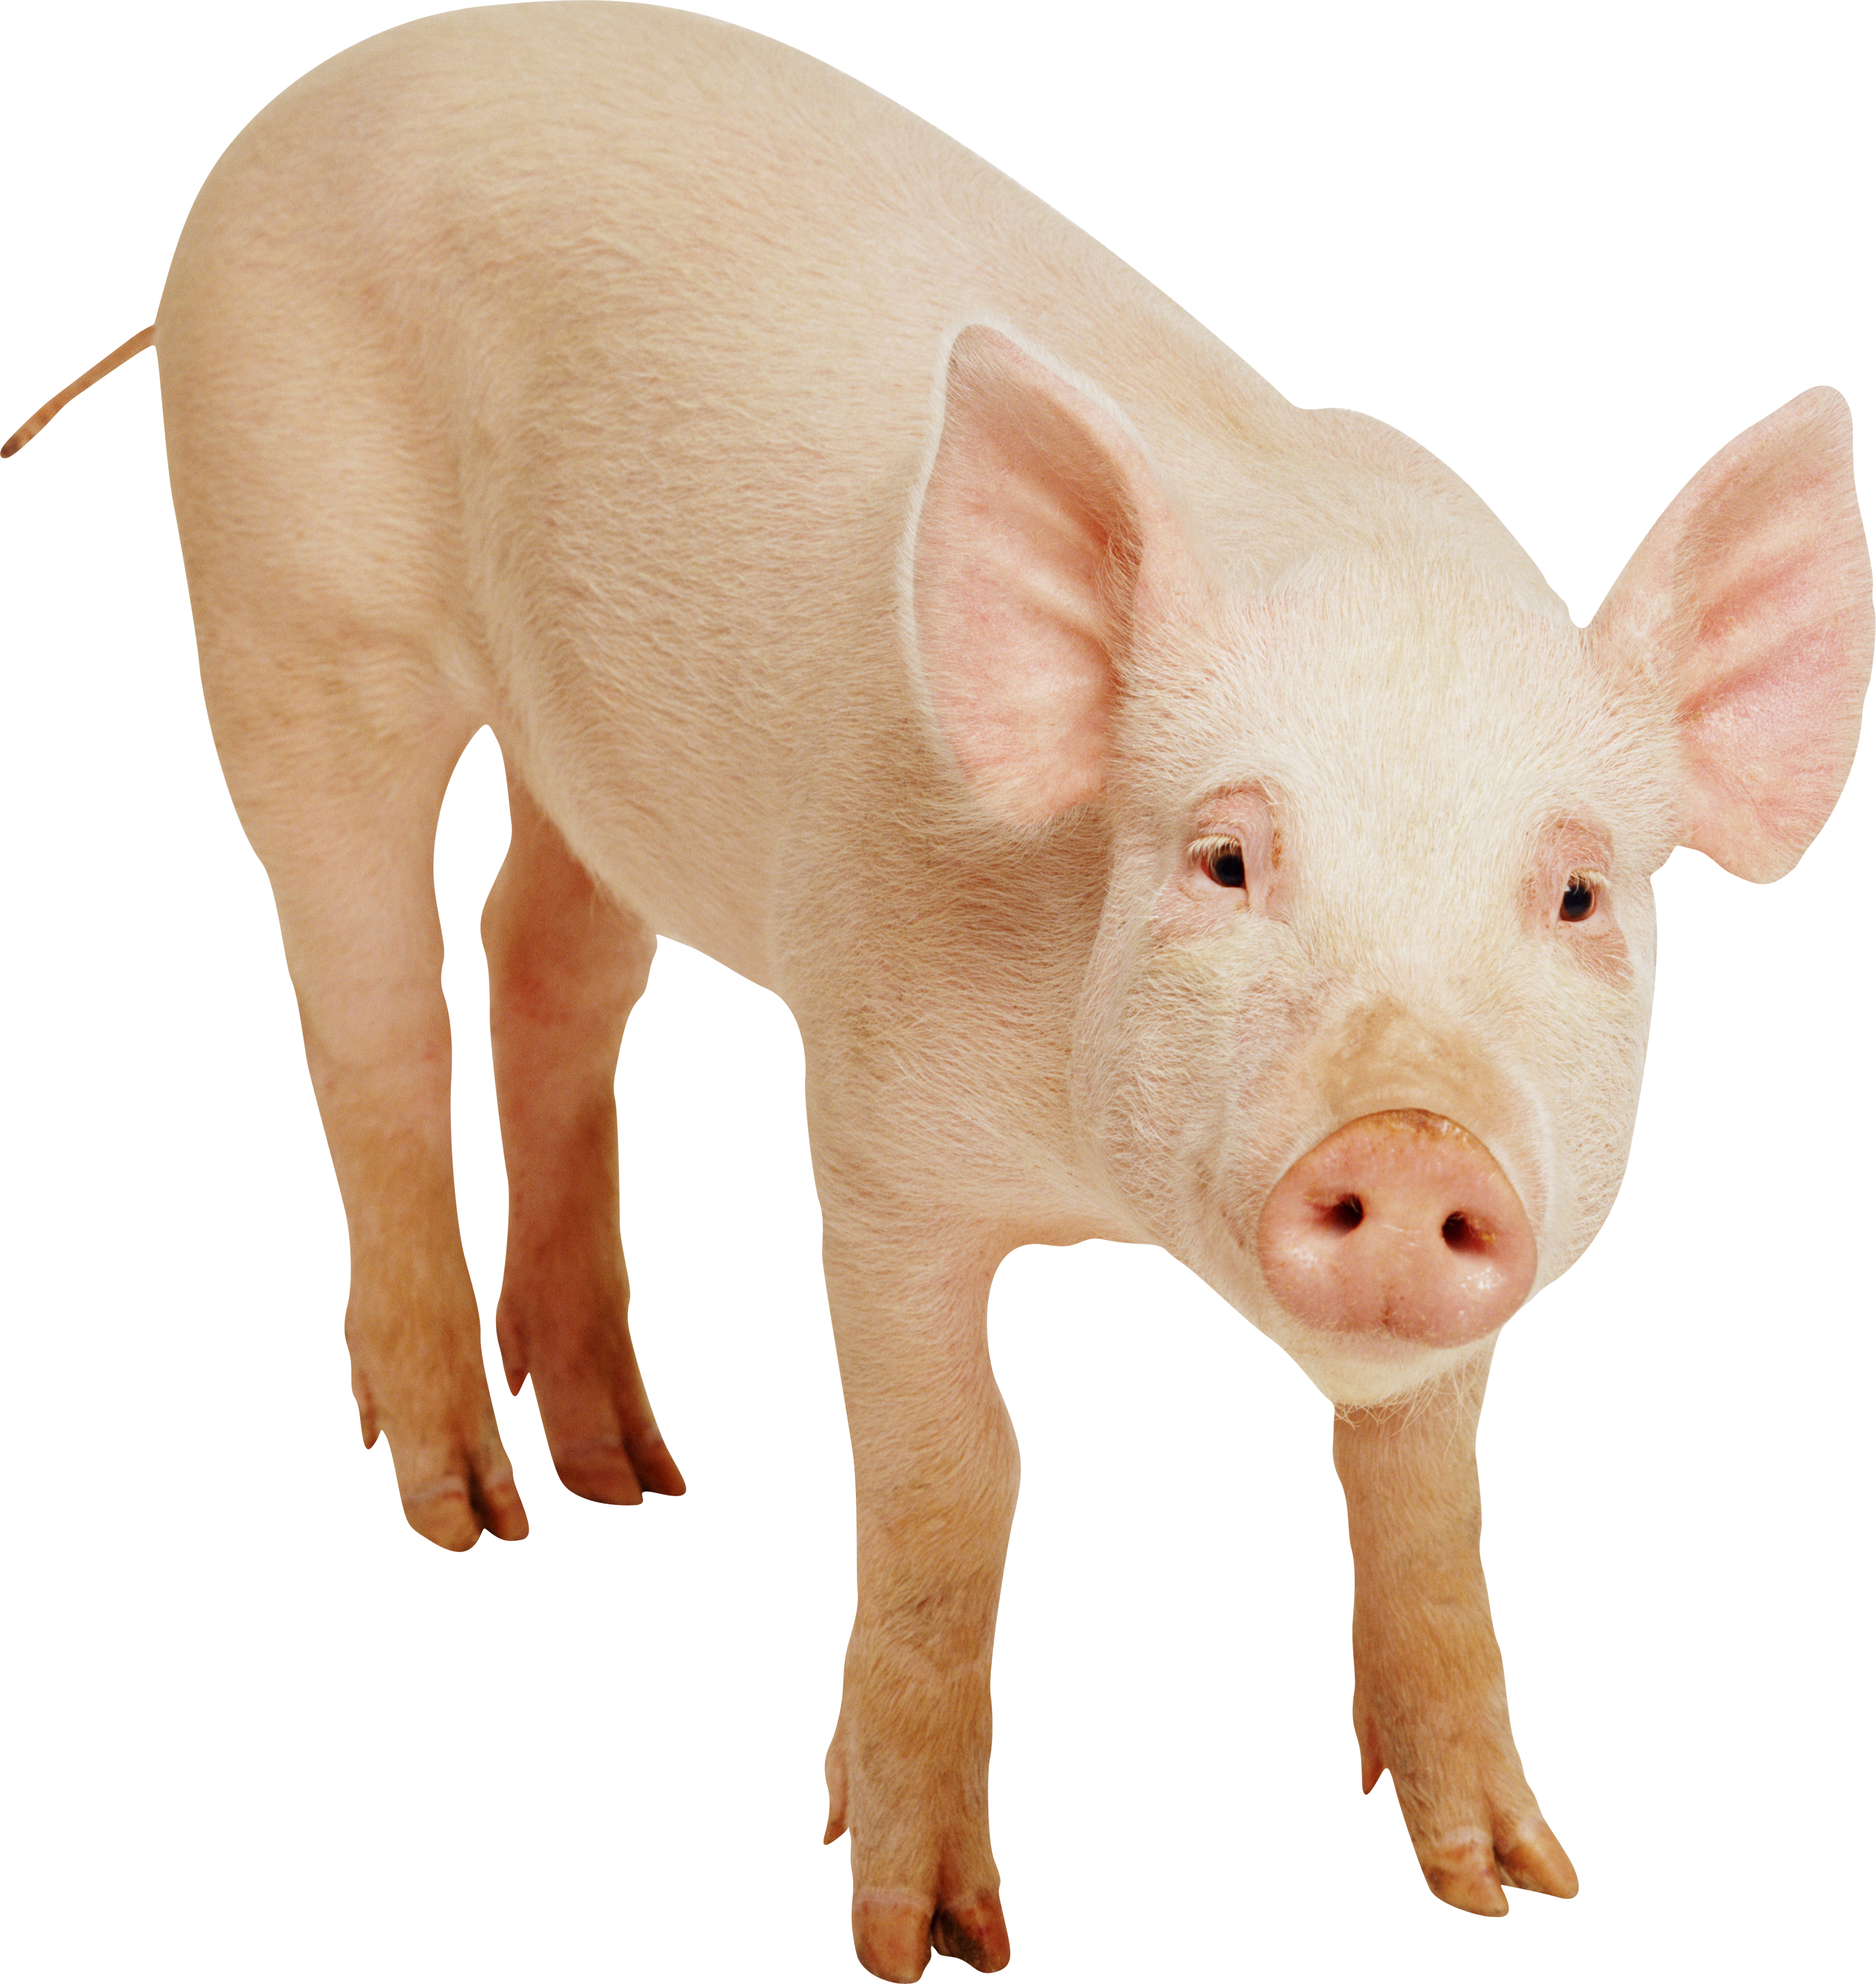 Pig Free Download Png PNG Image